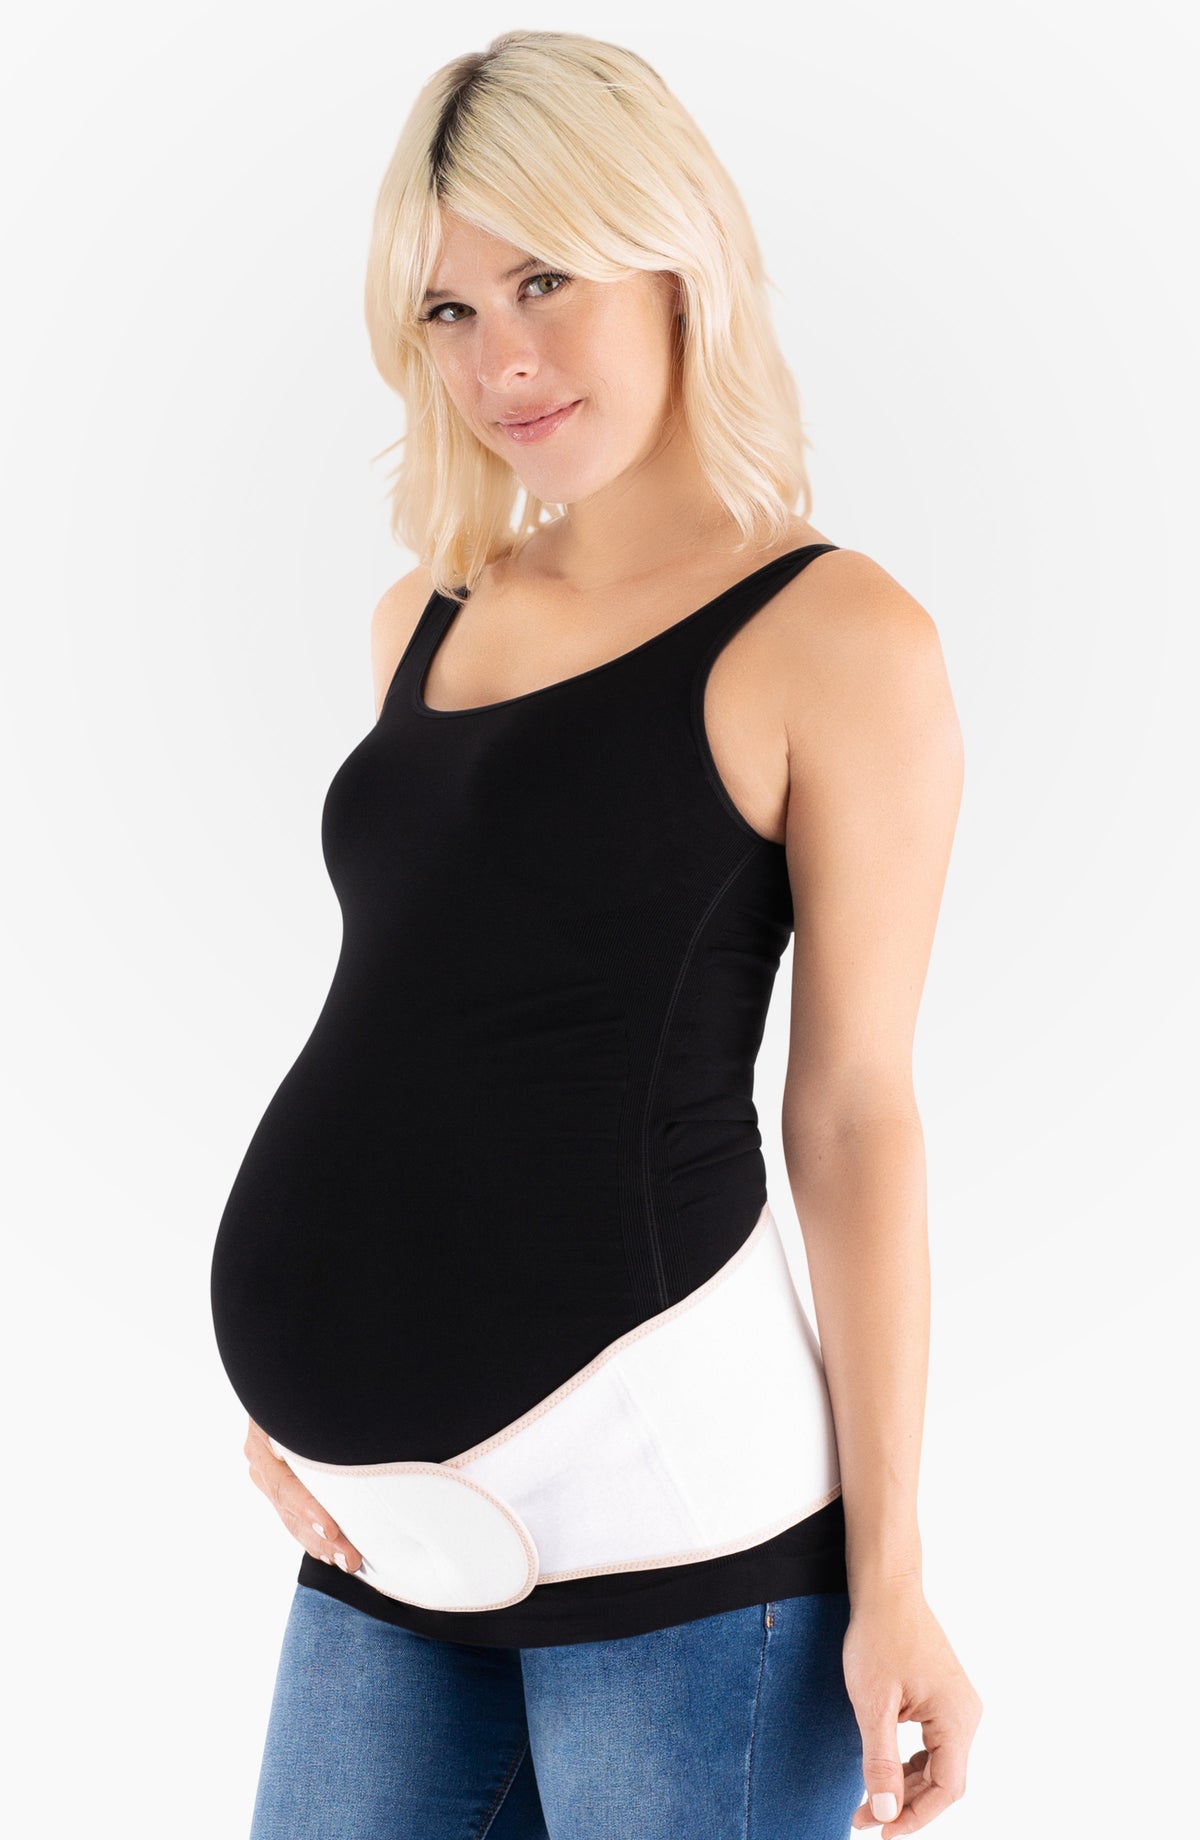 Fertile Mind Belly Belt – Maternity Belt Combo Kit